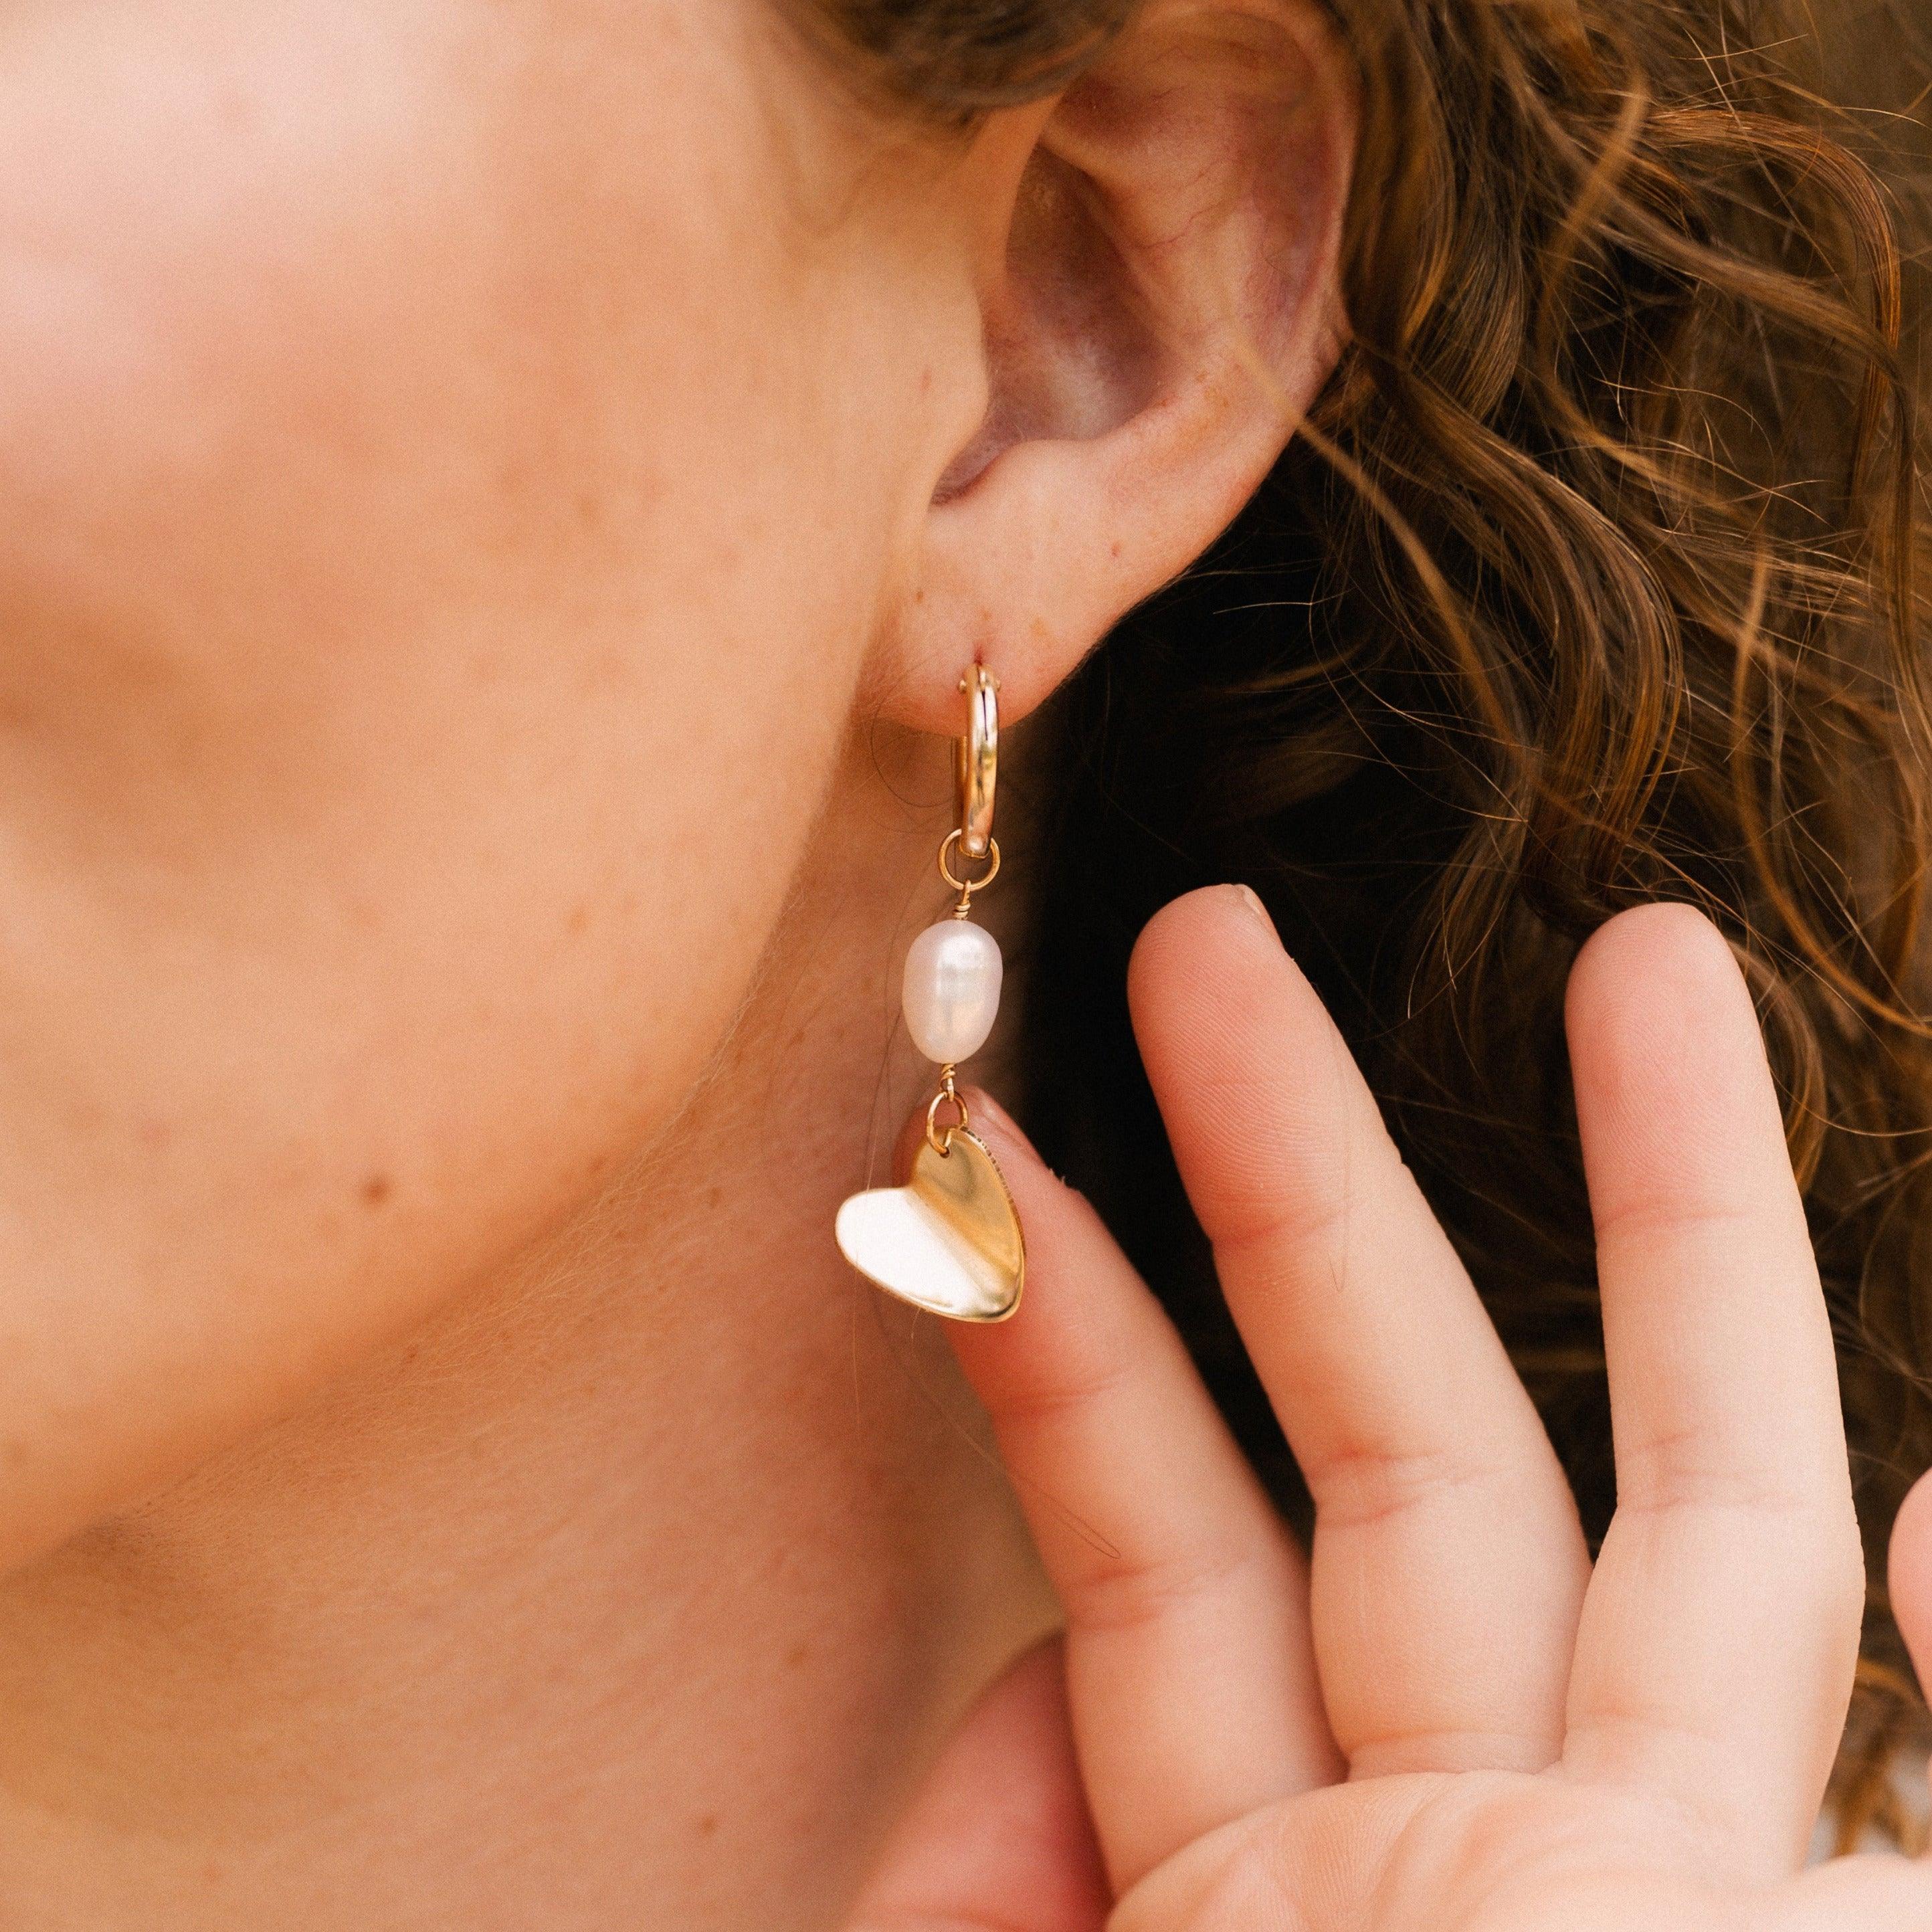 Paper Heart Hoop Earrings - Nolia Jewelry - Meaningful + Sustainably Handcrafted Jewelry